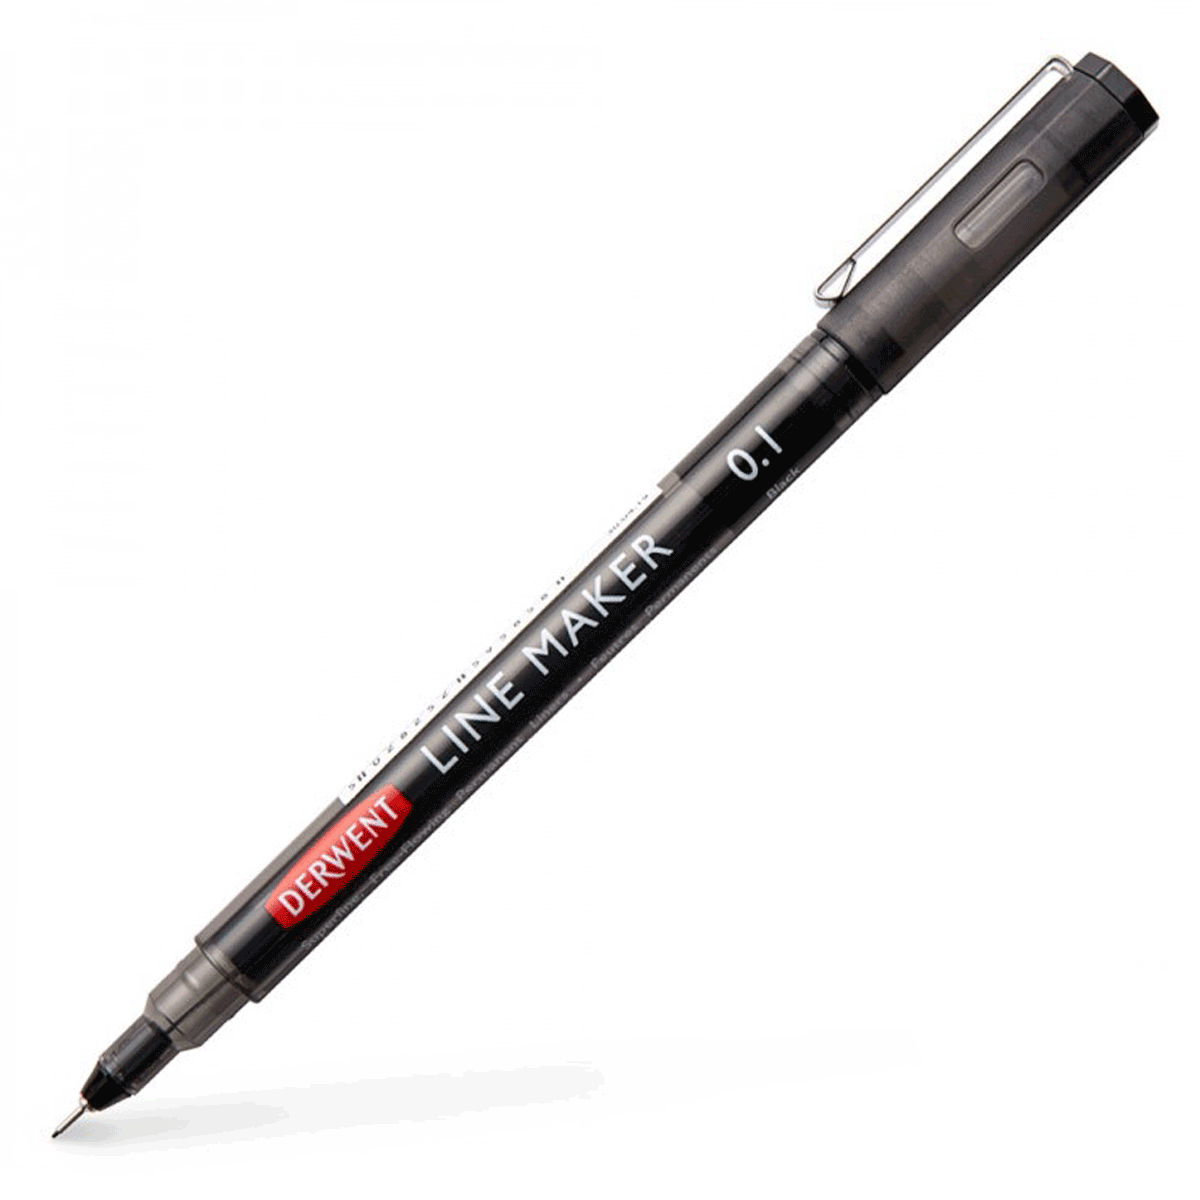 Derwent Graphik Line Marker Pen - Black 0.1